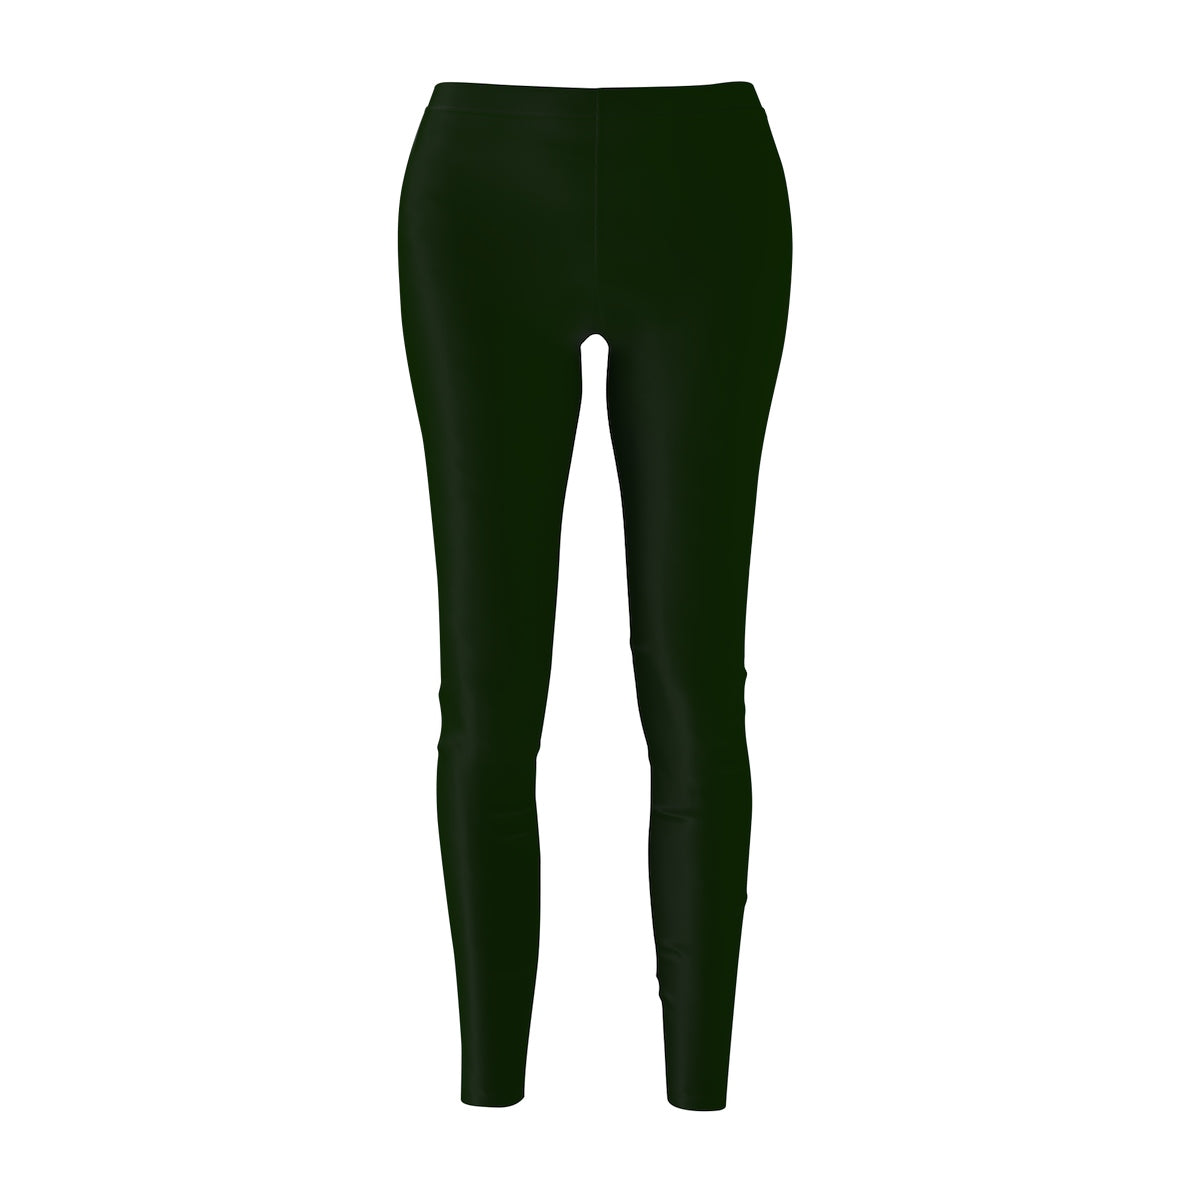 Basil Green Women's Casual Leggings, Classic Solid Color Print Best Tights - Made in USA-Casual Leggings-M-Heidi Kimura Art LLC